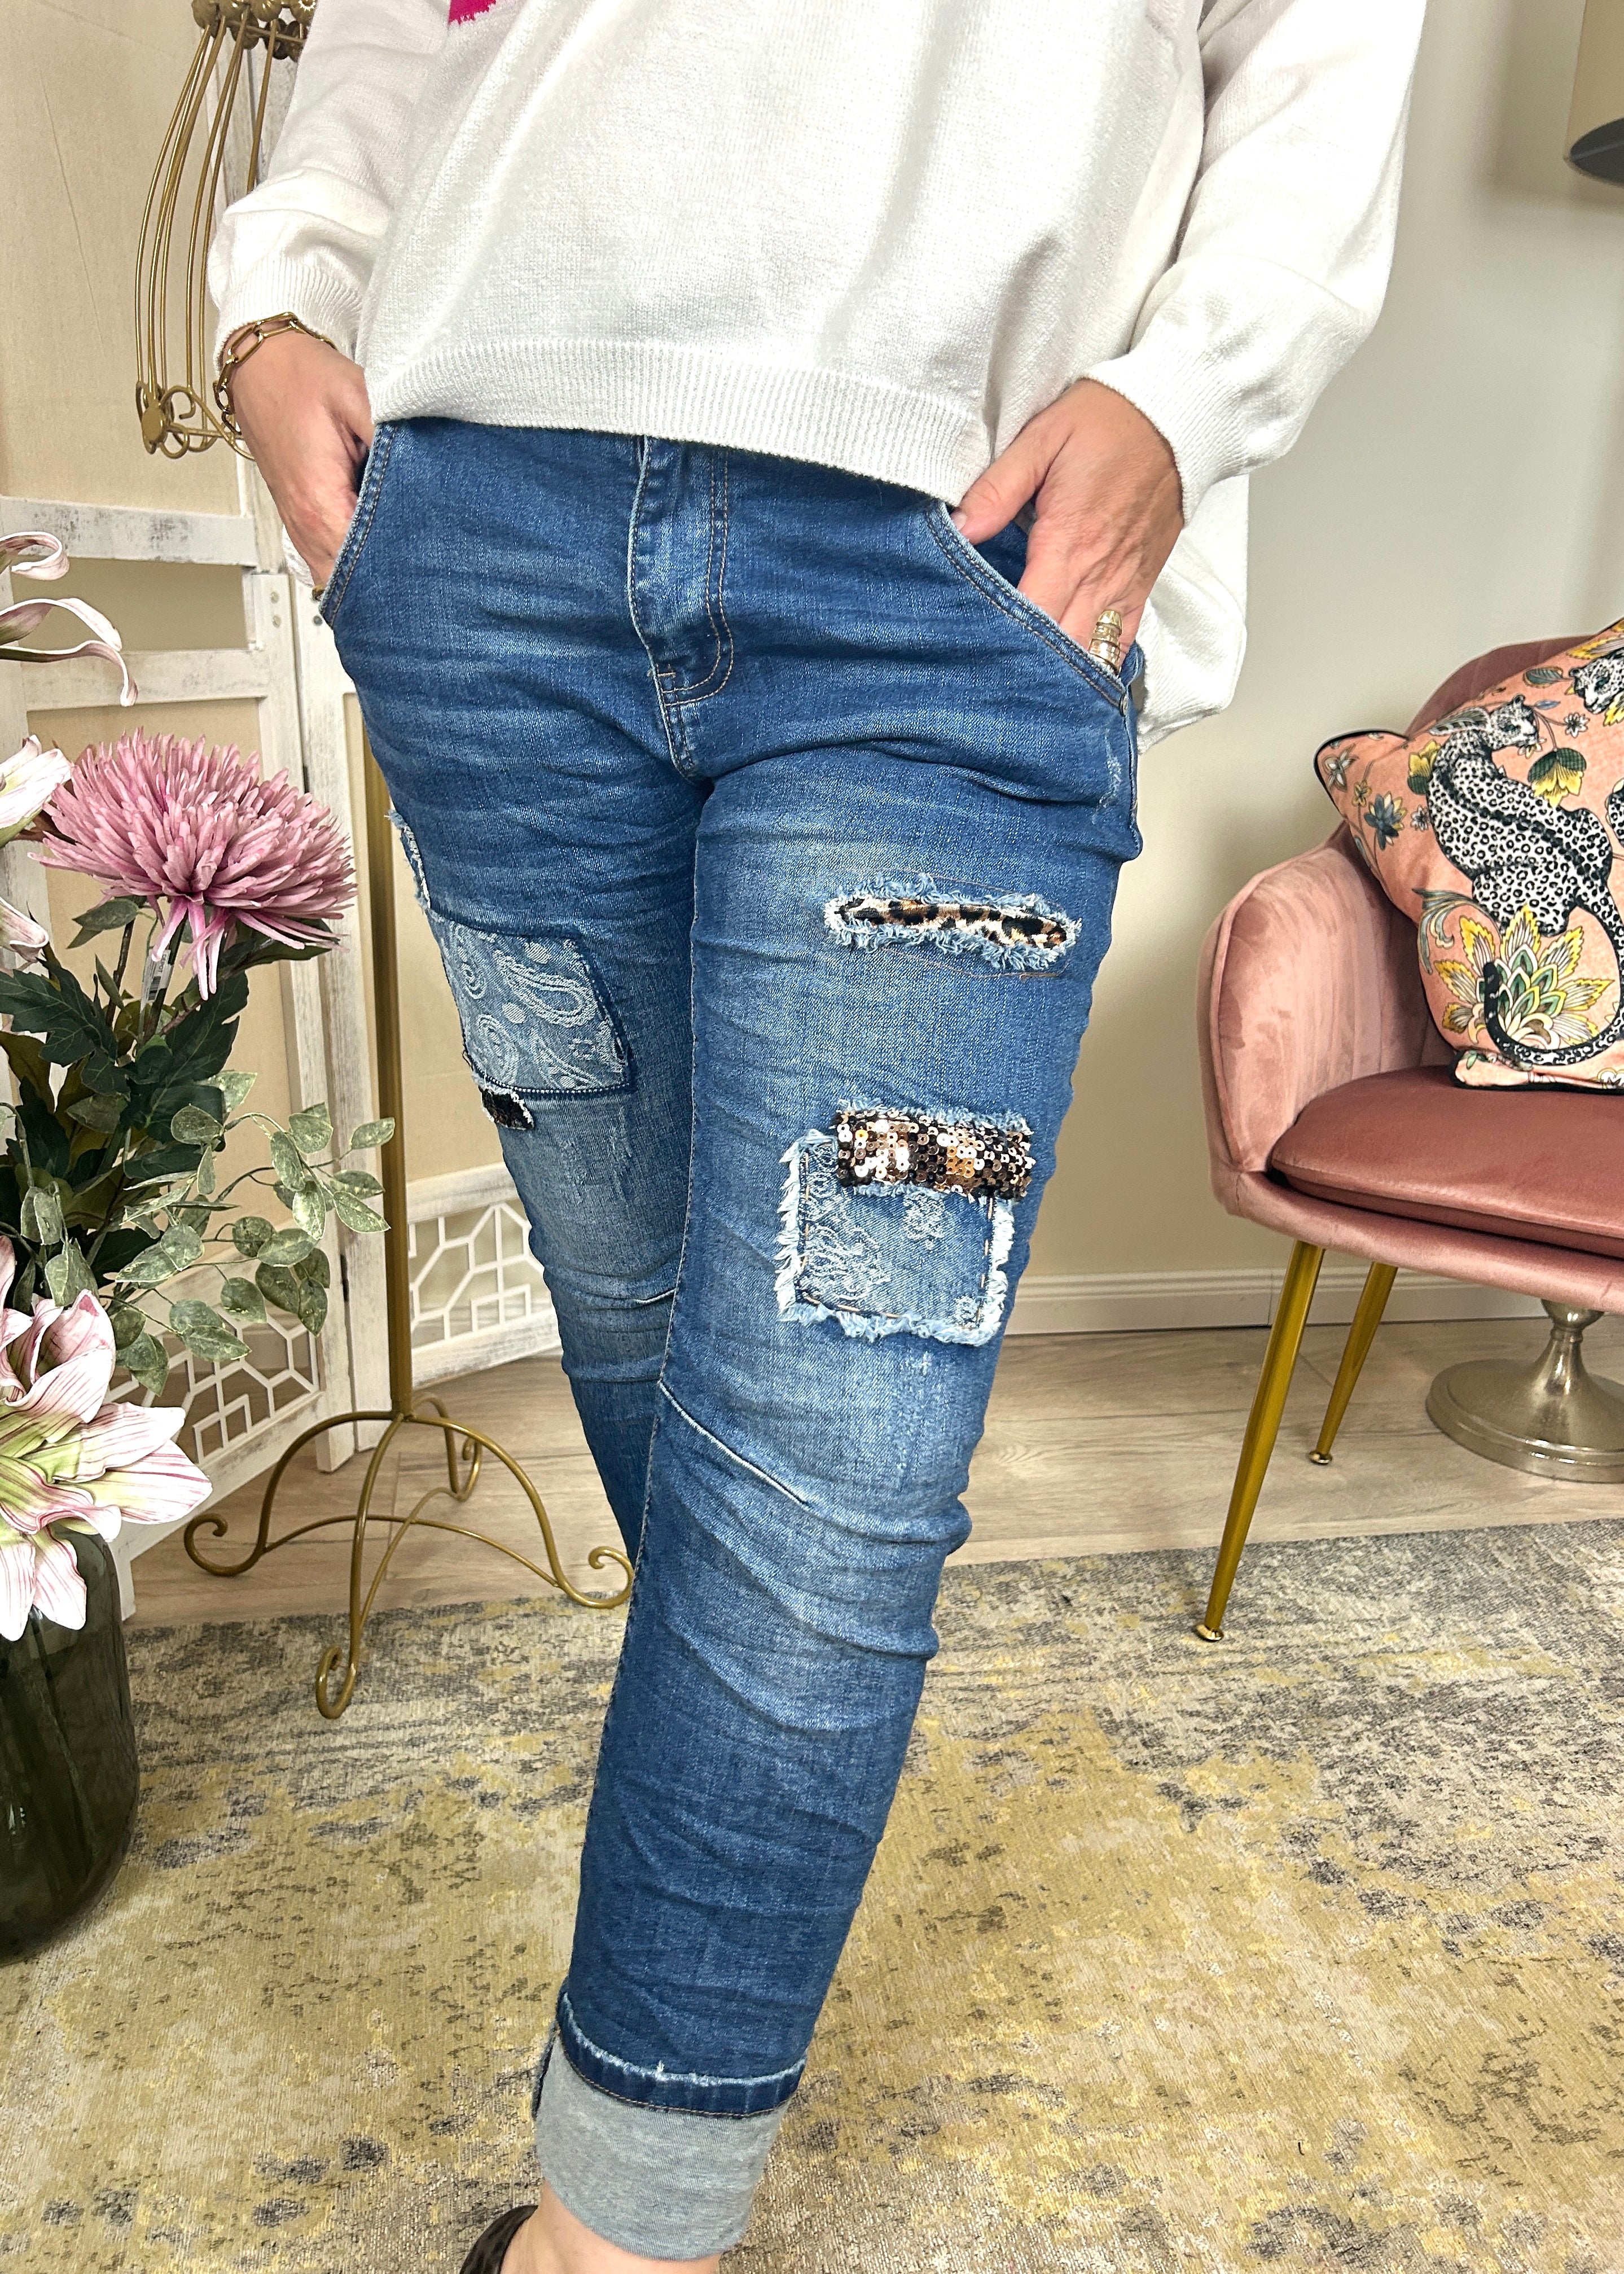 Jeans im Vintage-Look, Leo-Stoff & Pailletten